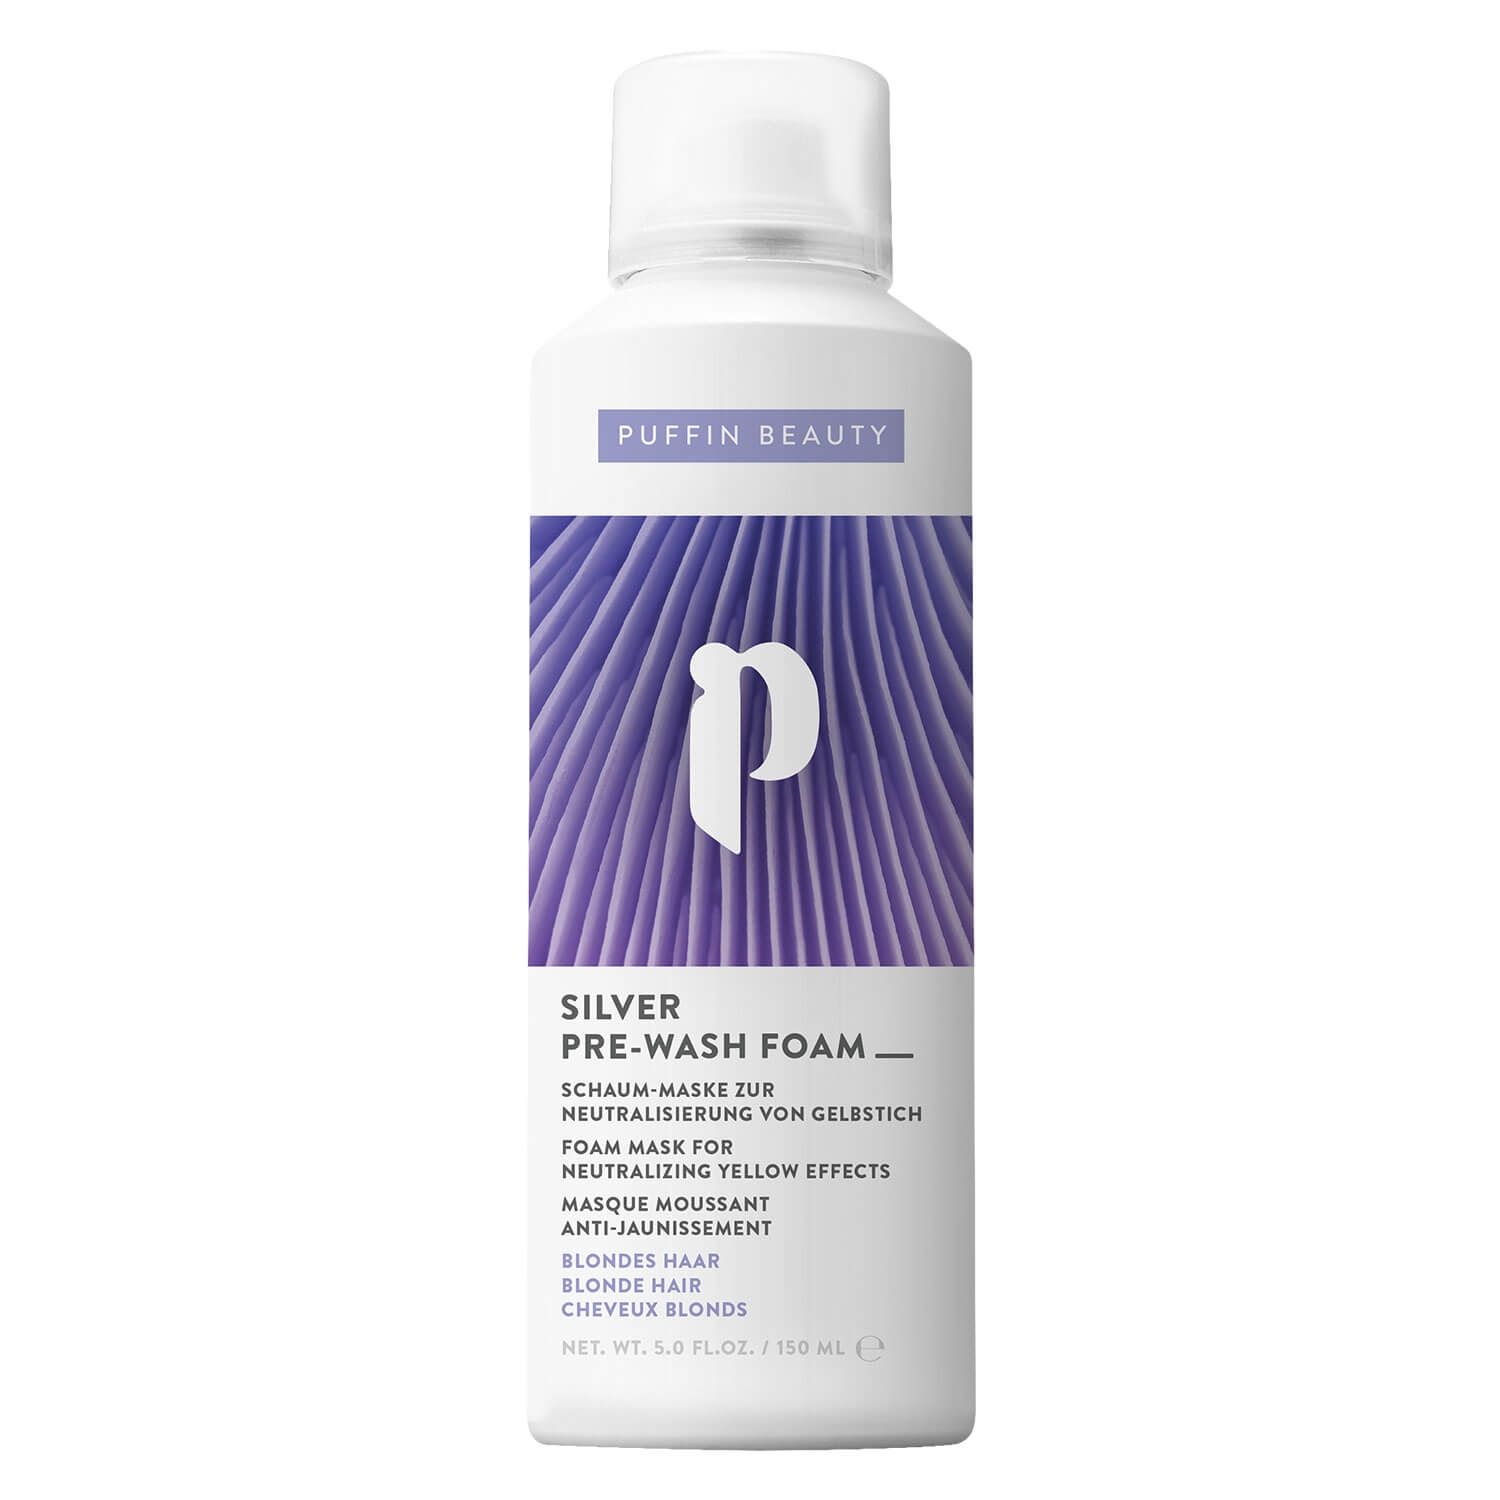 Produktbild von Puffin Beauty Care - Silver Pre-Wash Foam